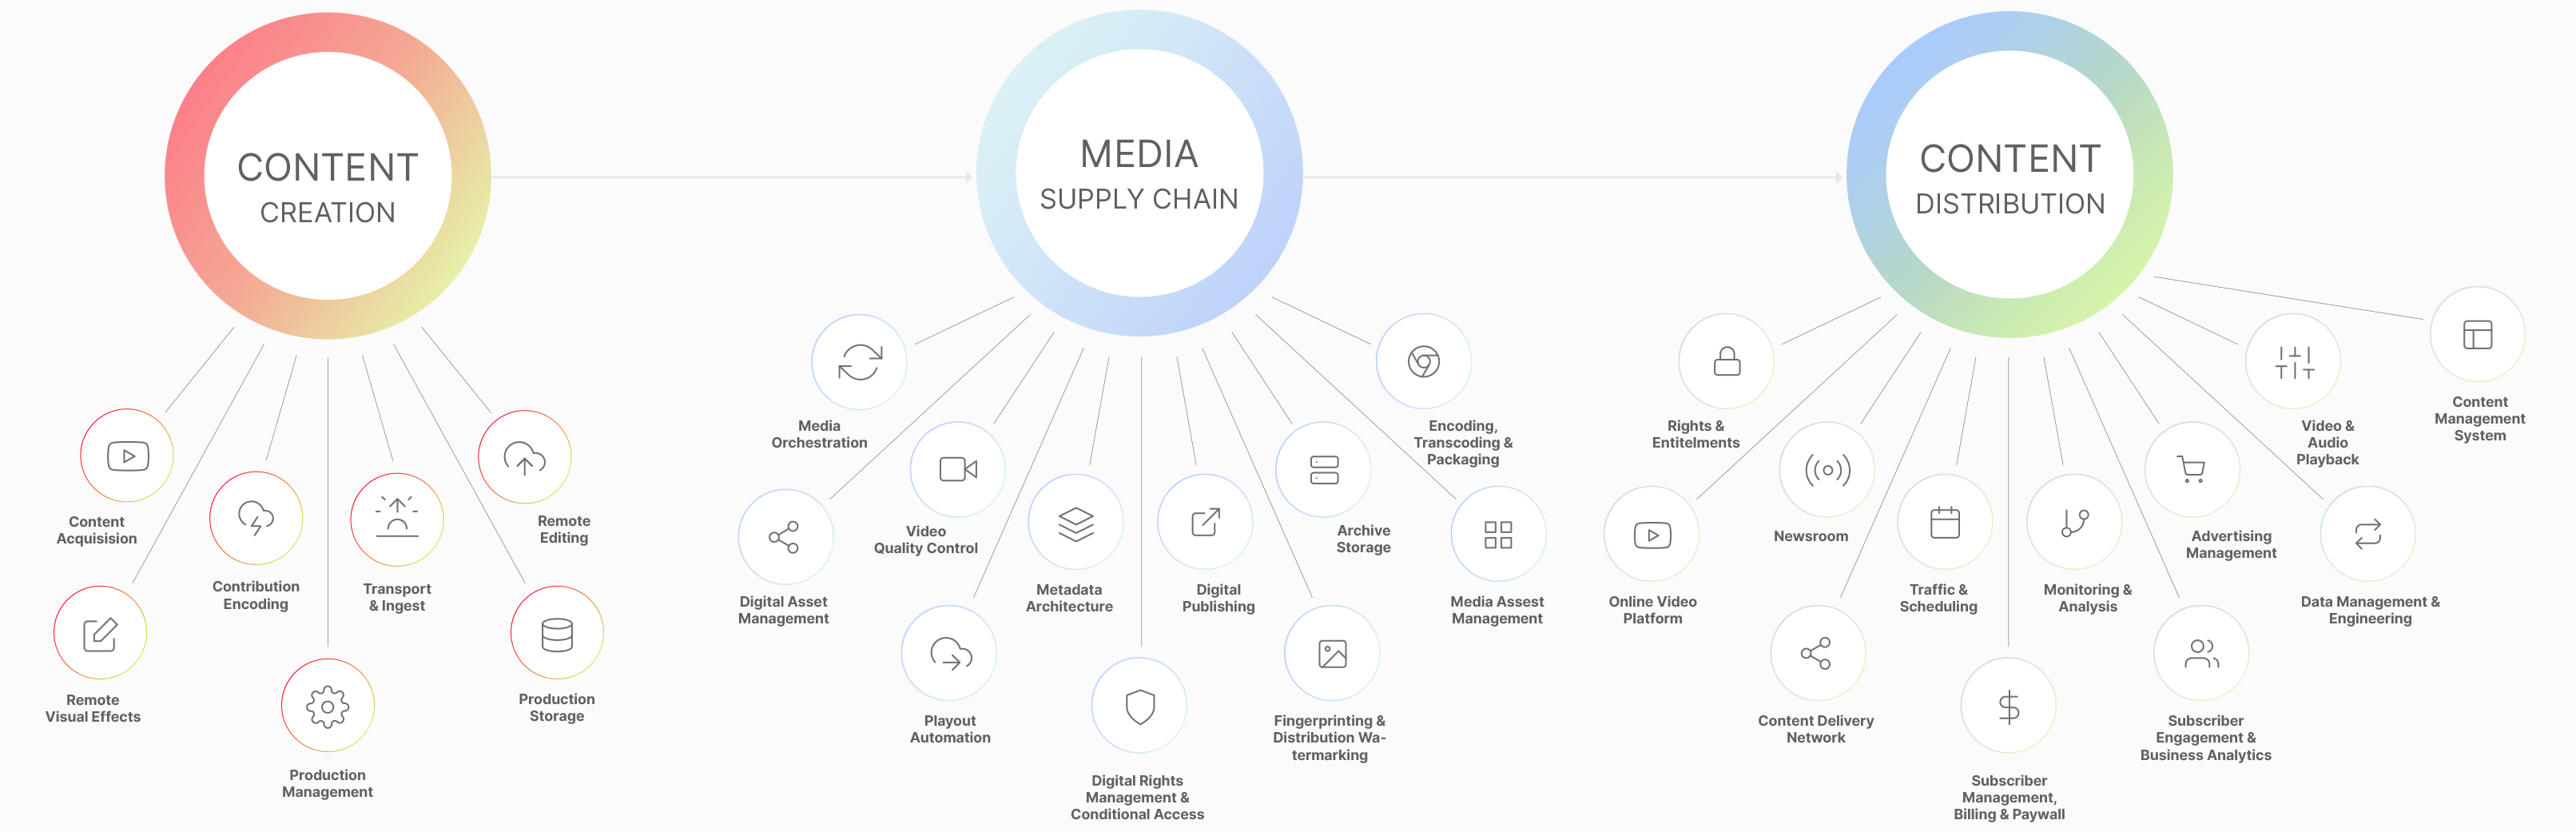 media supply chain